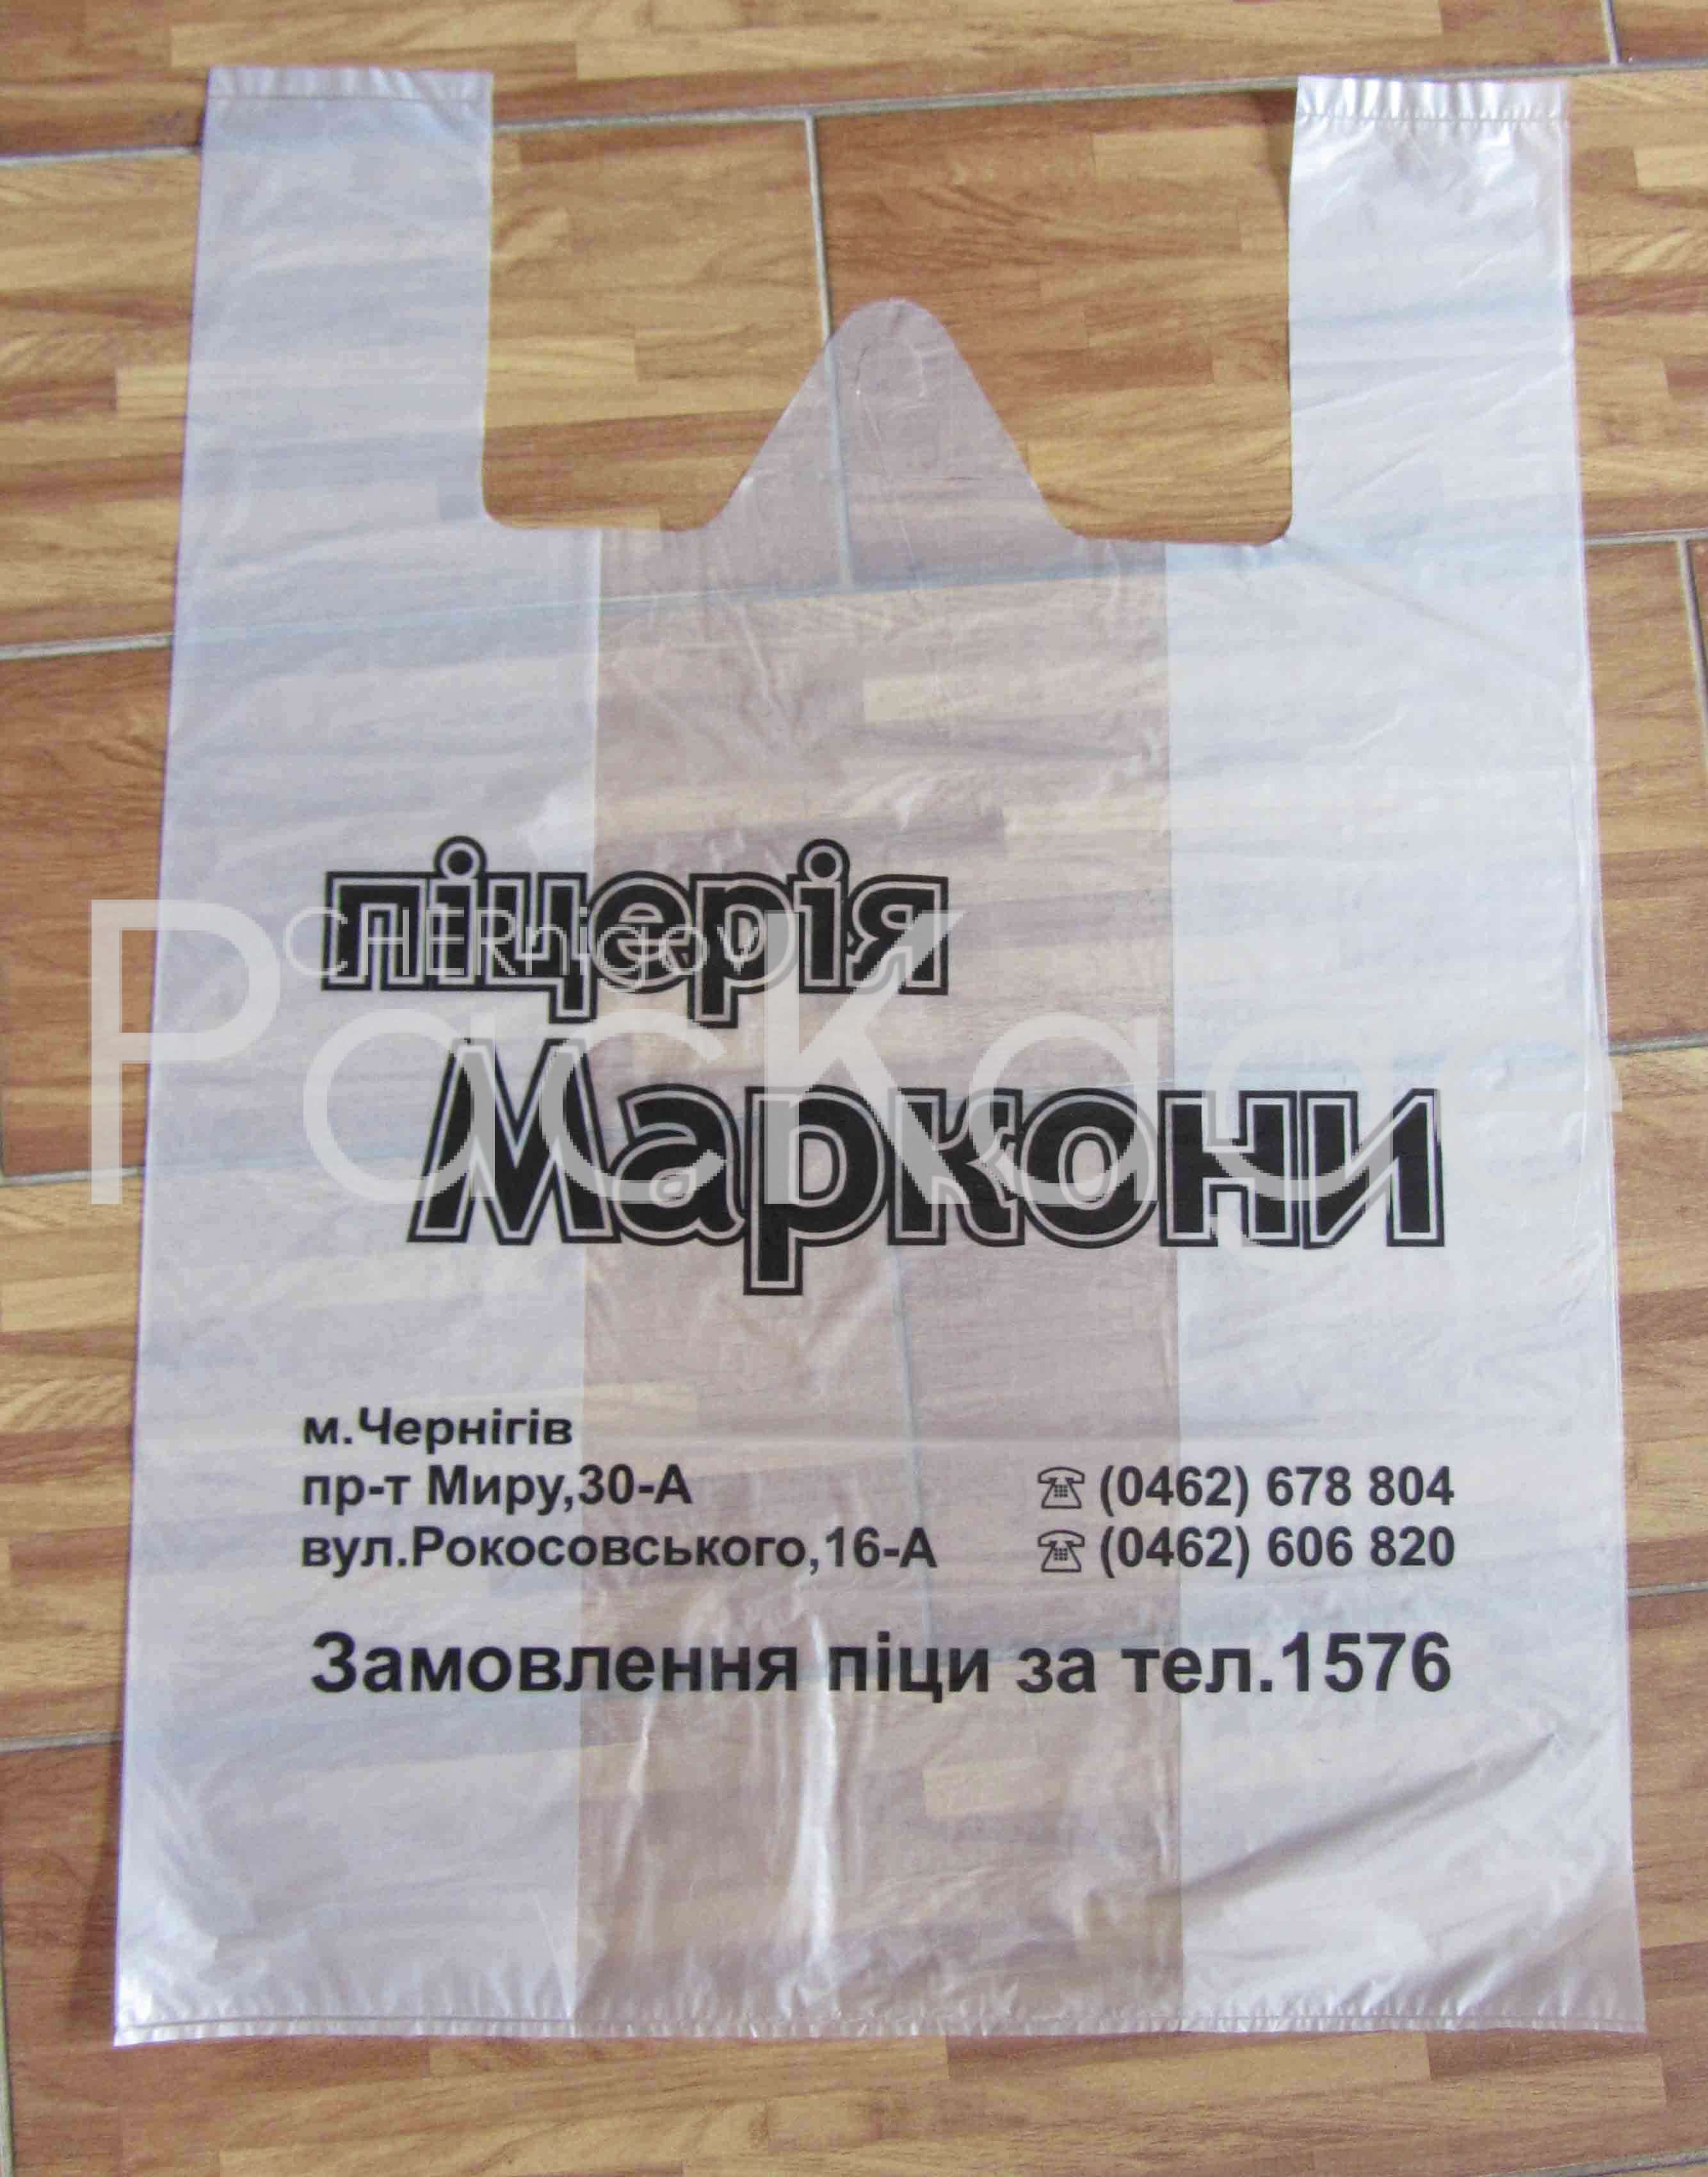 Как производят целлофановые пакеты Chernigov Package - Фото IMG_6488